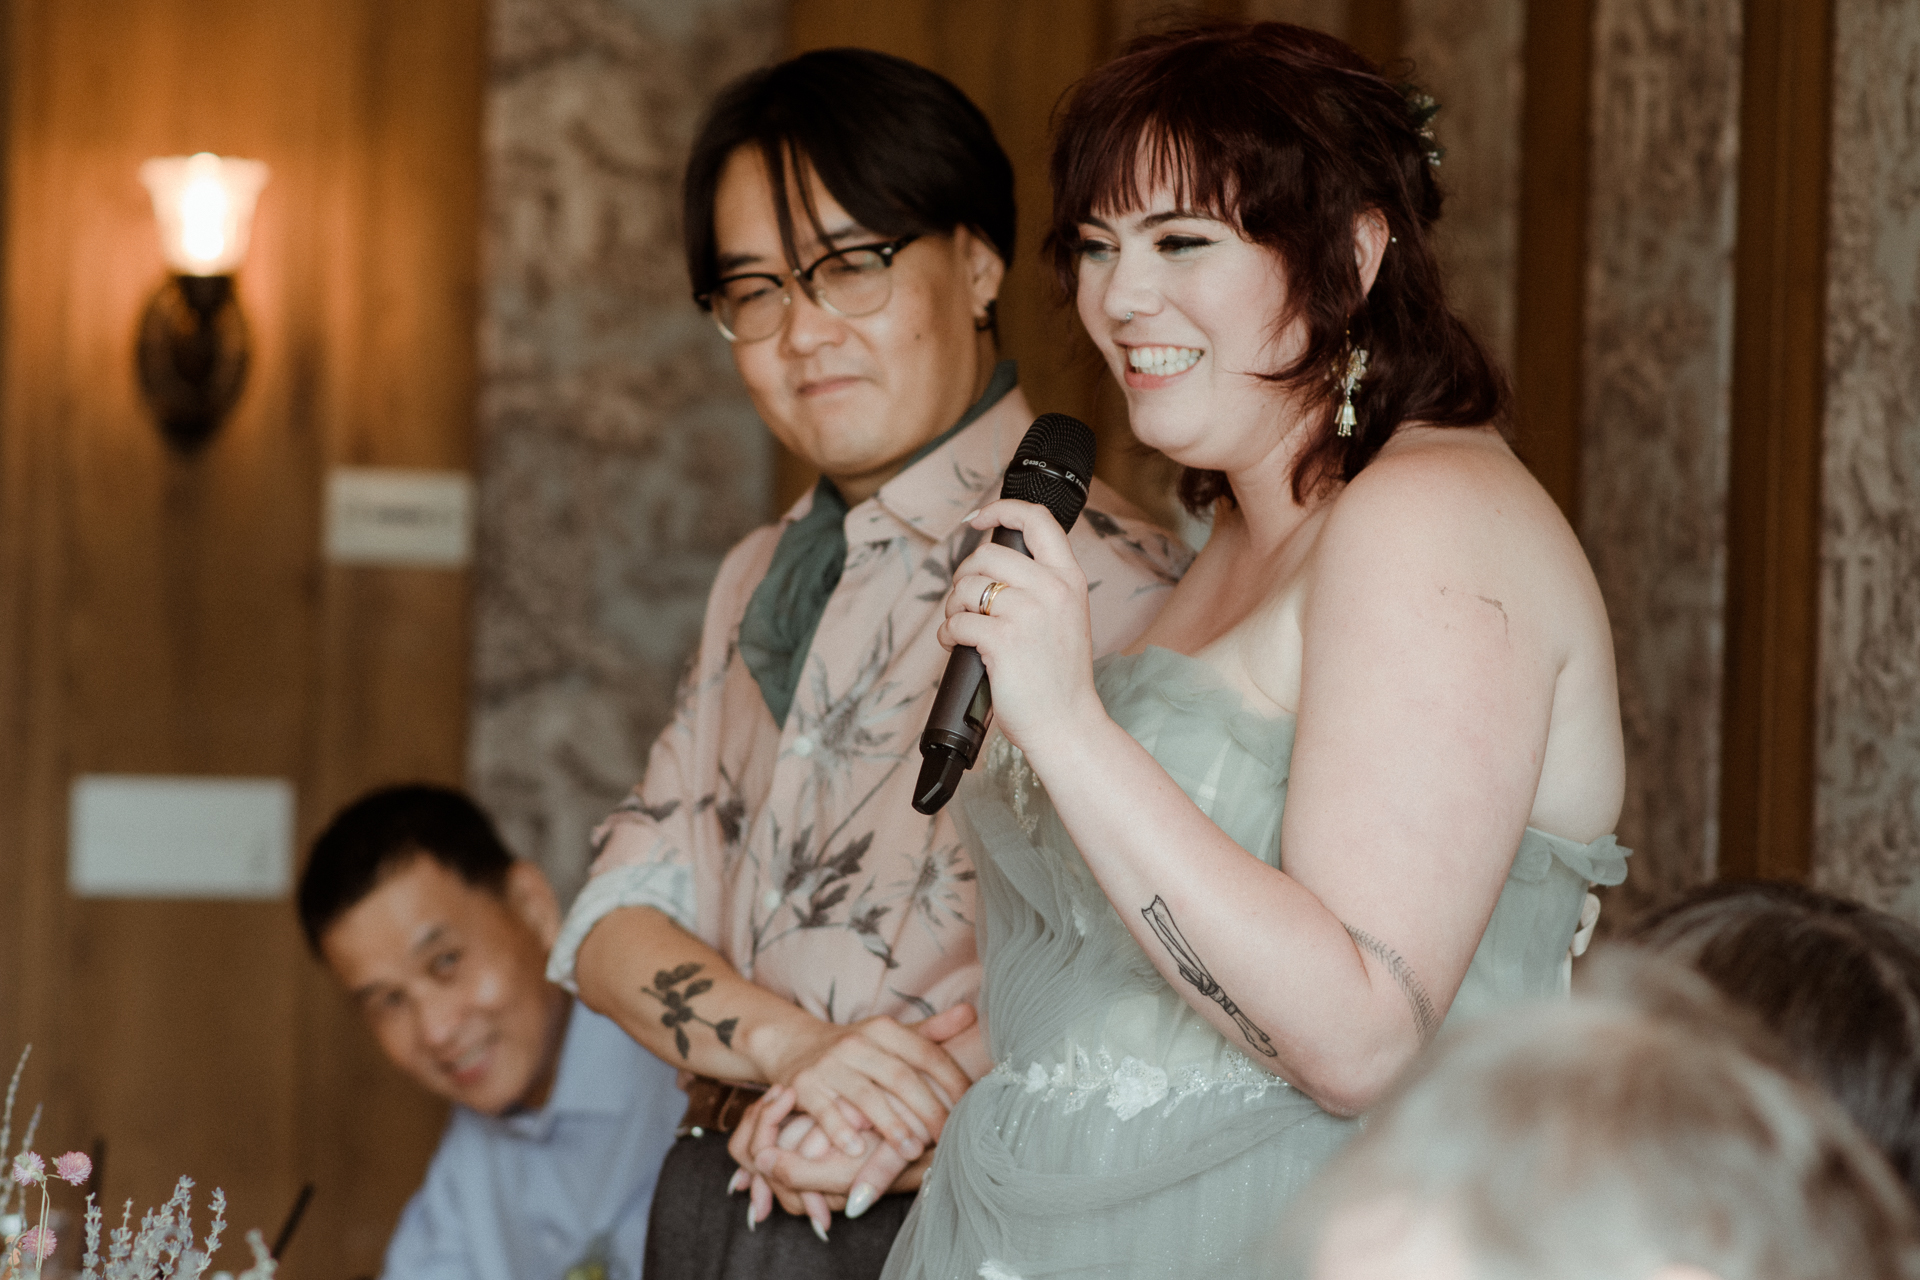 A woman holding a microphone gives a speech beside a man at a wedding reception.